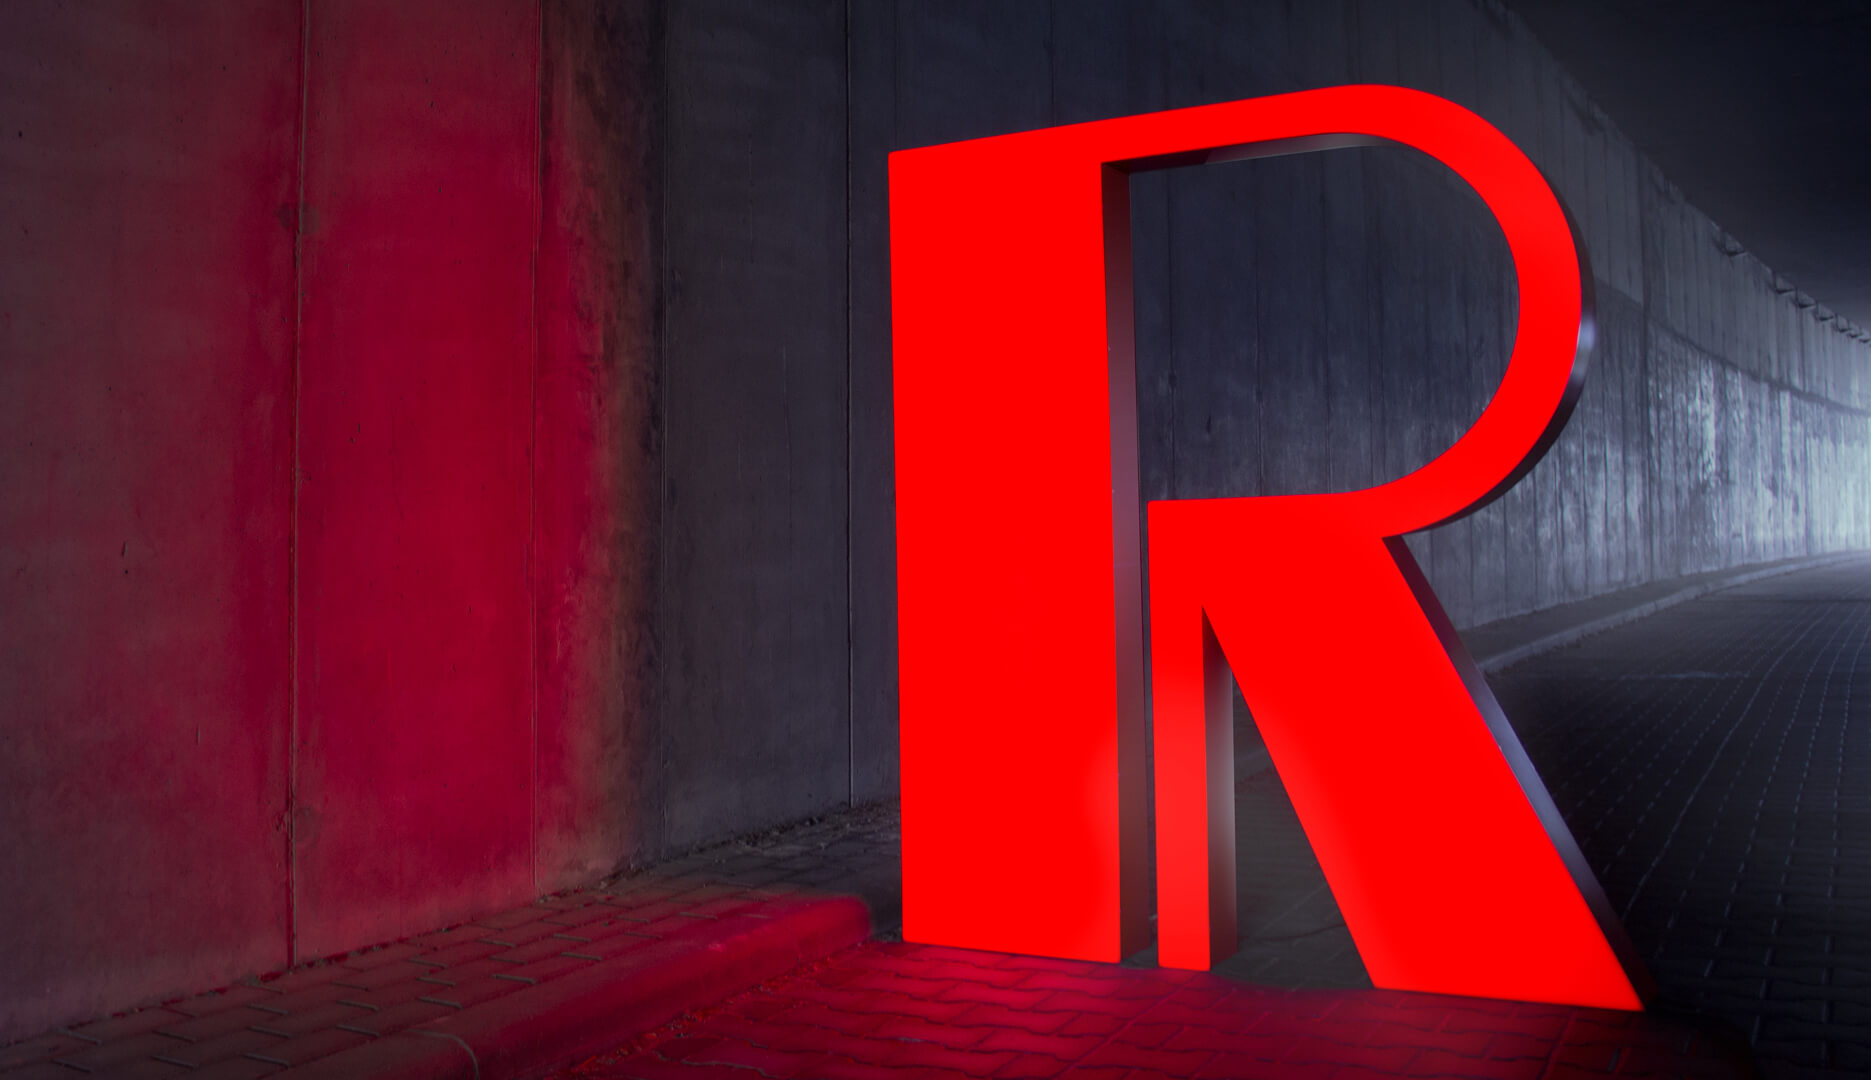 Roter Buchstabe R - Großformatiger Buchstabe R in Rot, LED-hinterleuchtet.